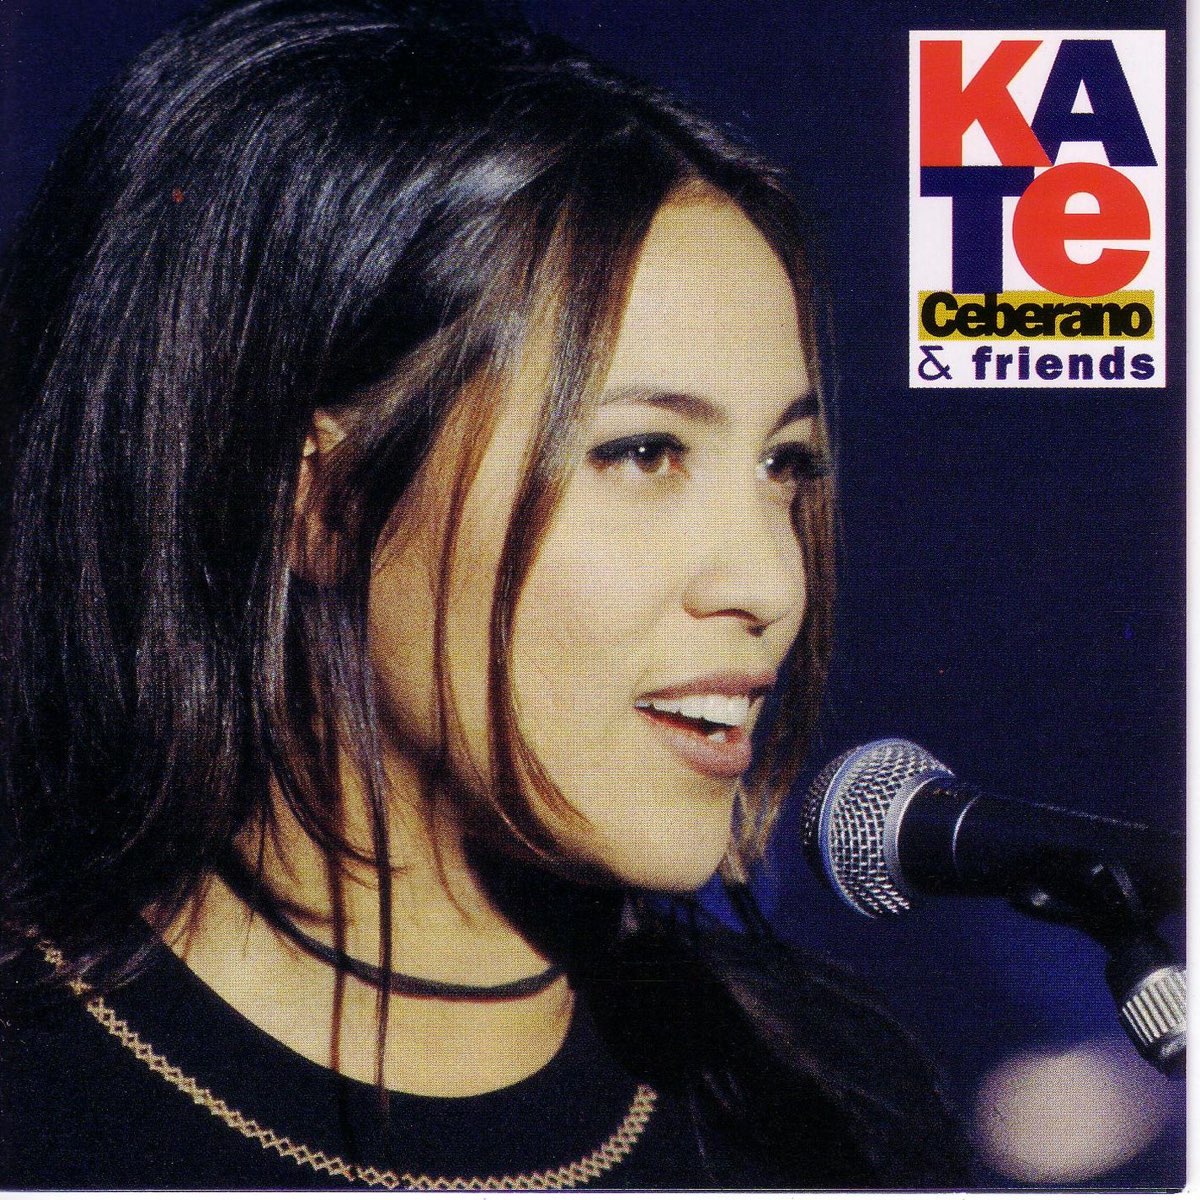 ‎Kate Ceberano & Friends by Kate Ceberano on Apple Music